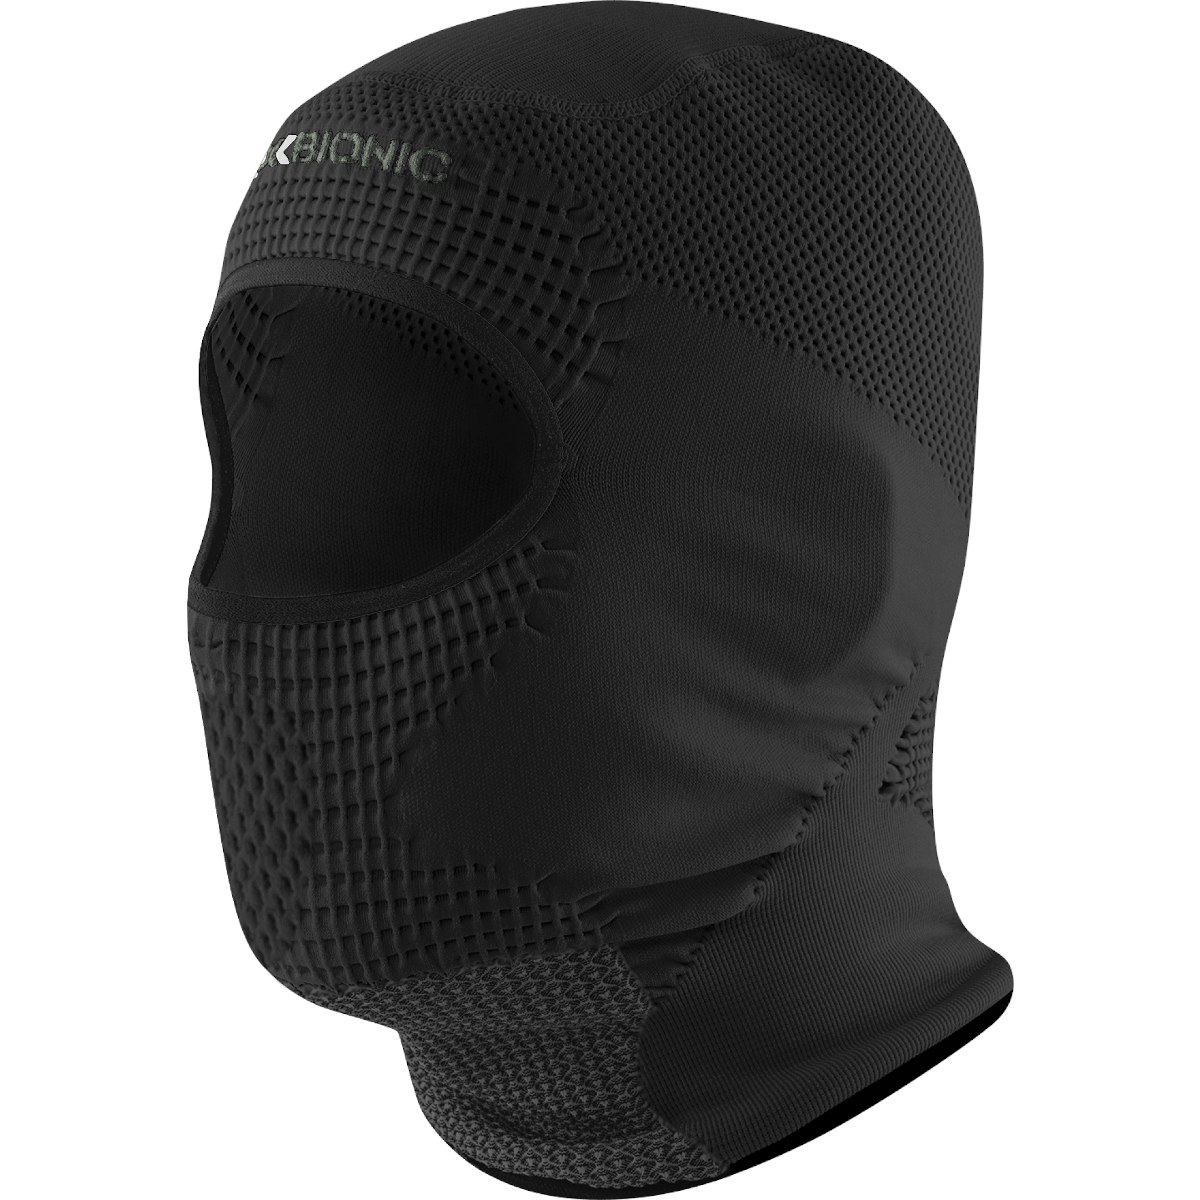 Produktbild von X-Bionic Stormcap Face 4.0 Gesichtsmaske - black/charcoal